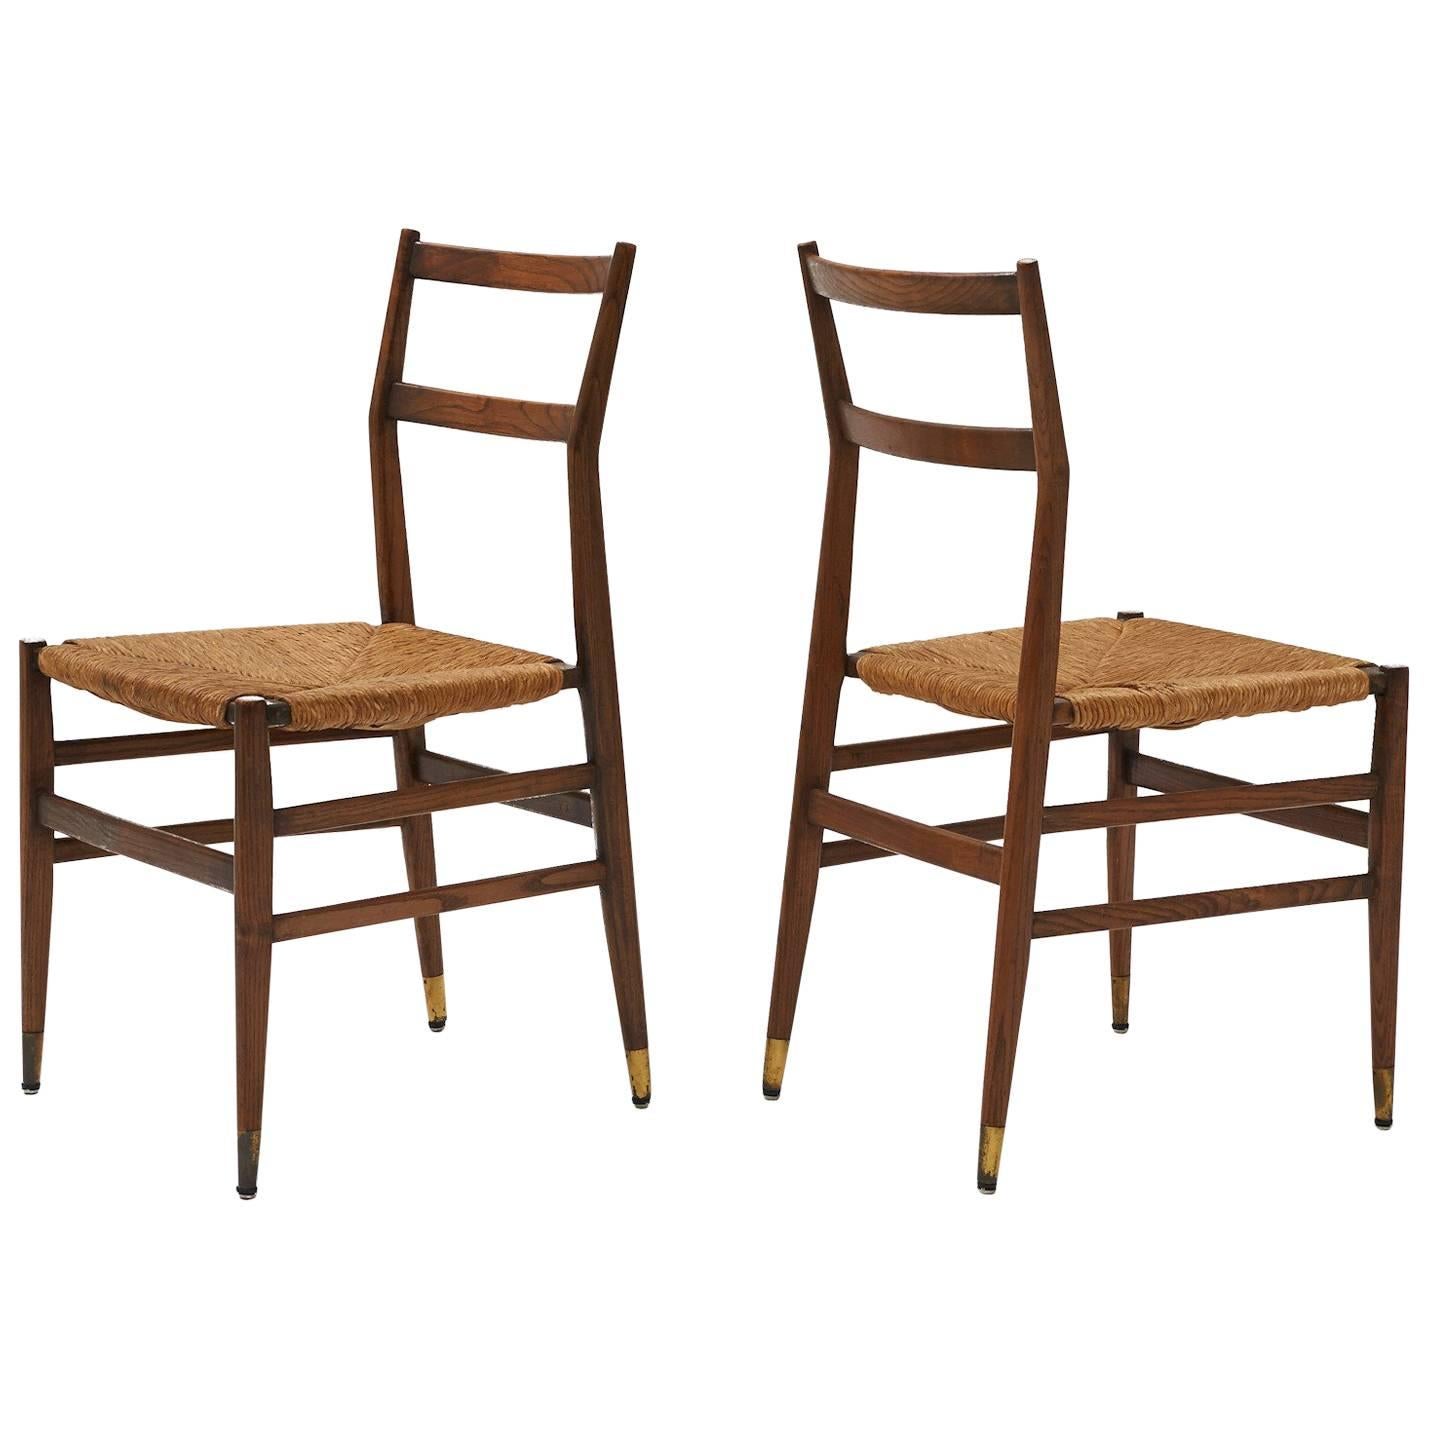 Pair of "Superleggera" Chairs by Gio Ponti